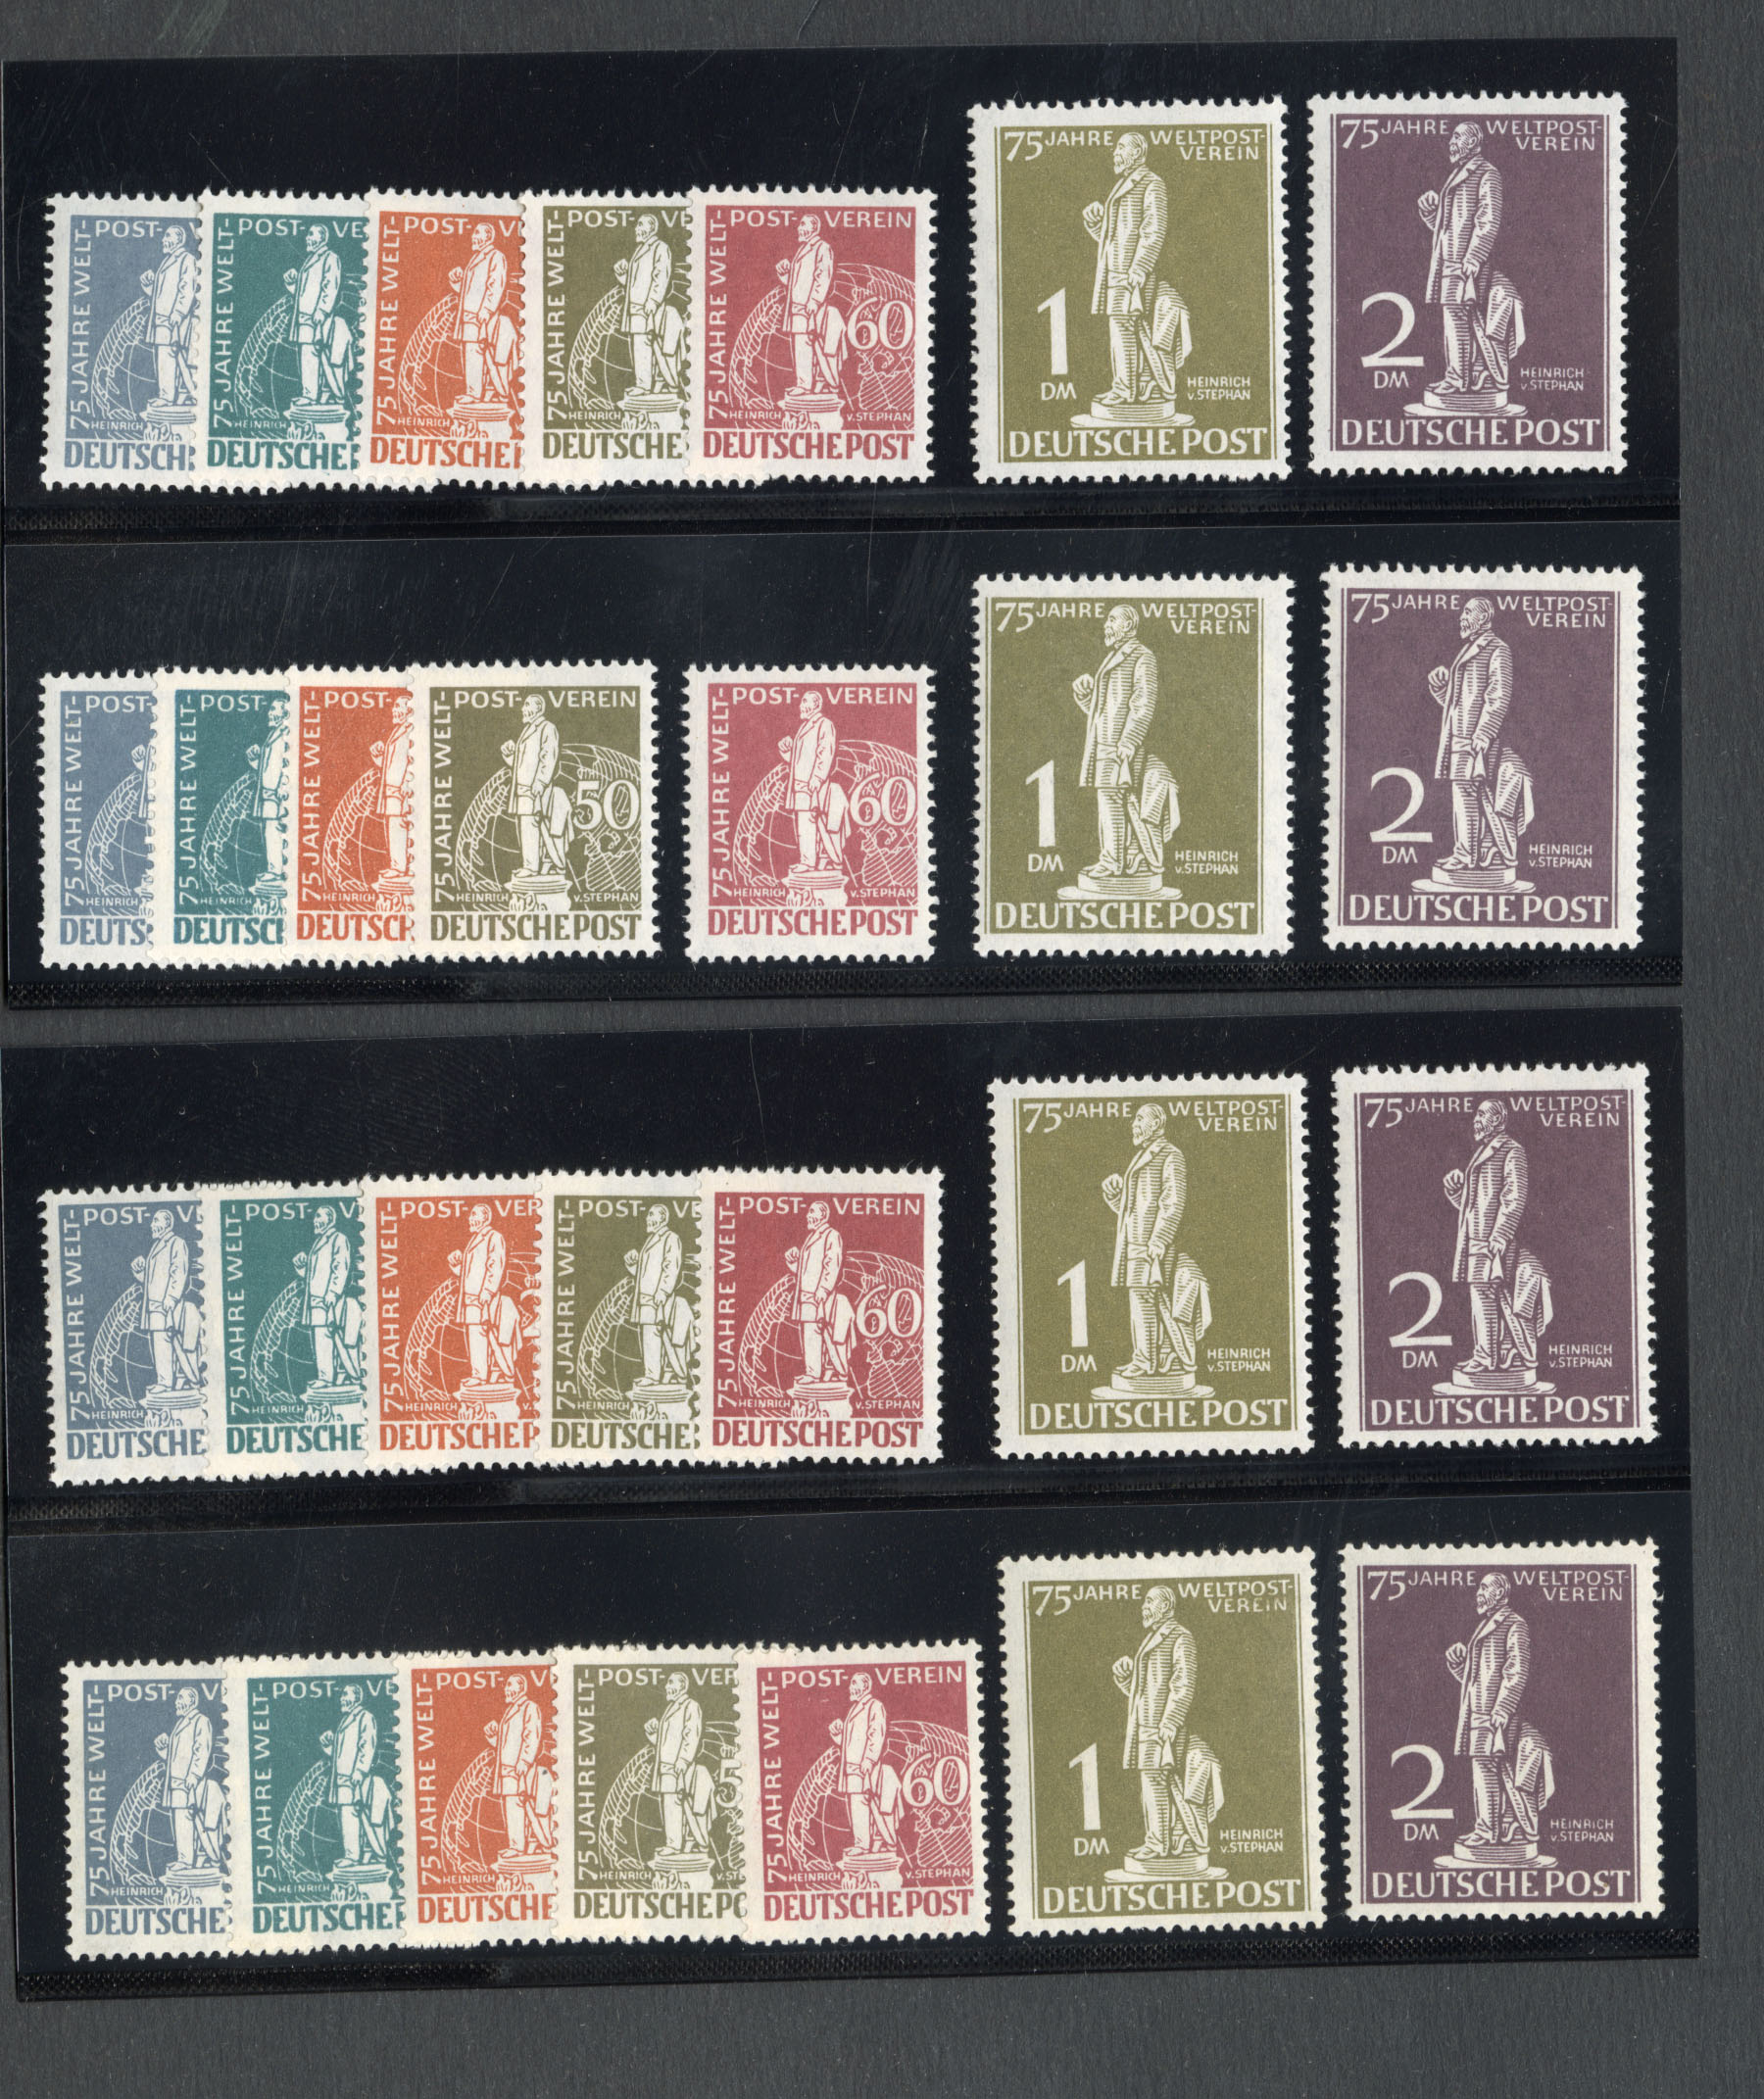 Lot 615 - BRITISH COMMONWEALTH CANADA  -  Cherrystone Auctions U.S. & Worldwide Stamps & Postal History